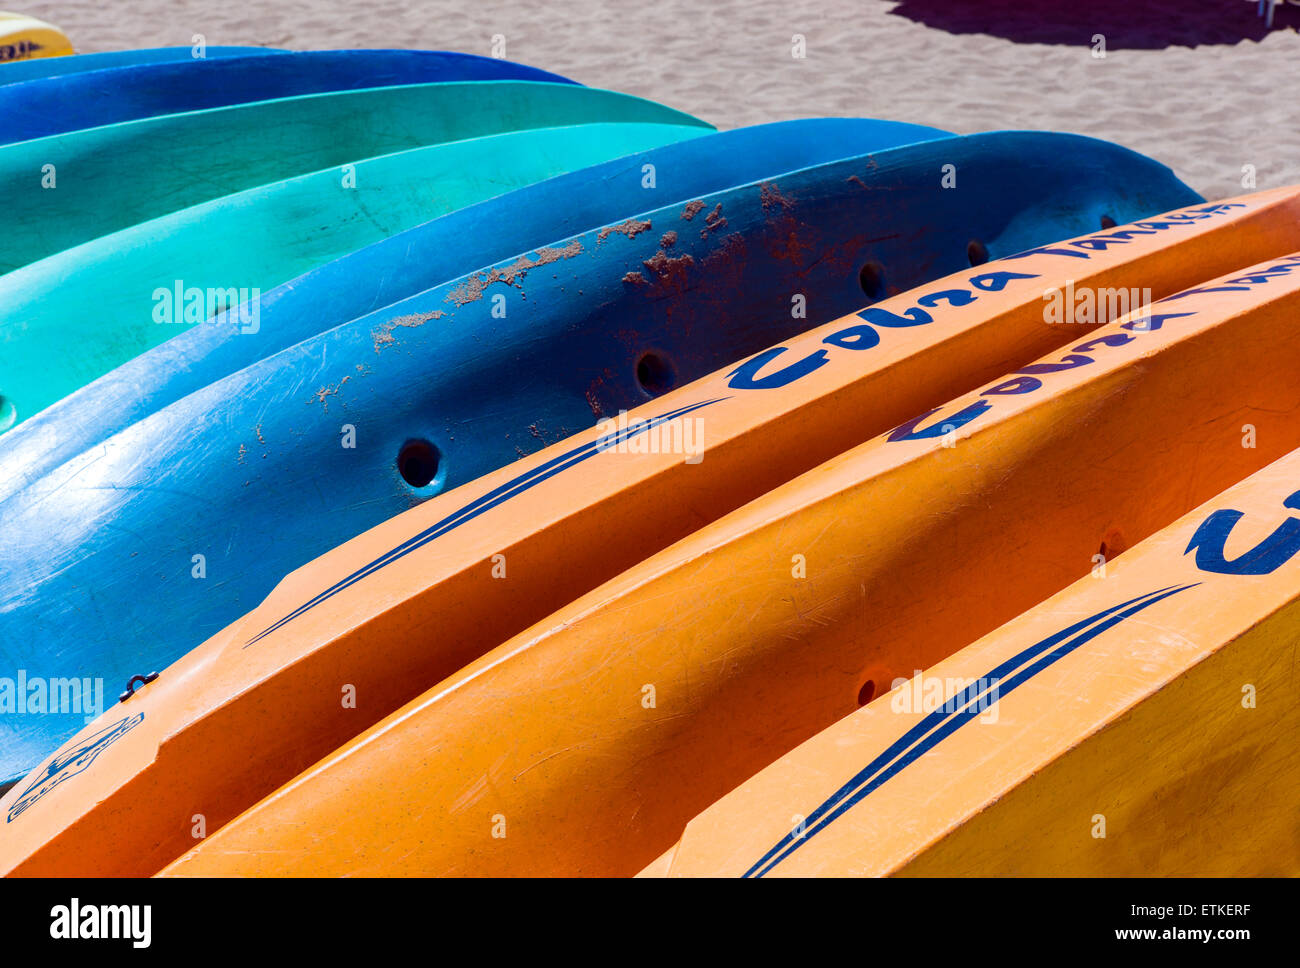 Graphic abstract view of colorful sea kayaks; Kaua’i Marriott Resort; Kalapaki Bay, Kaua'i, Hawaii, USA Stock Photo